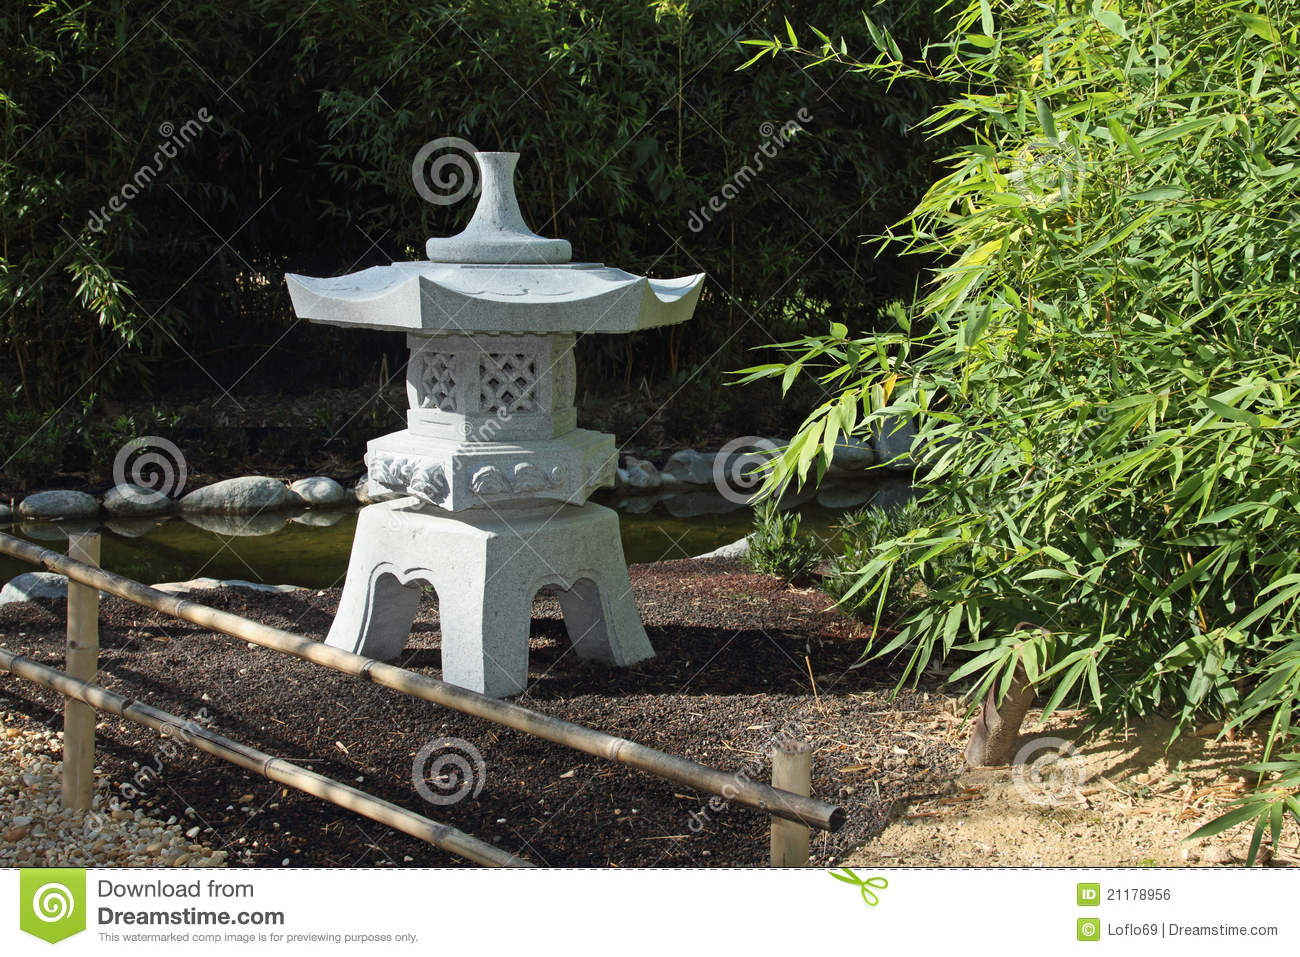 Zen Garden Royalty Free Stock Image   Image  21178956